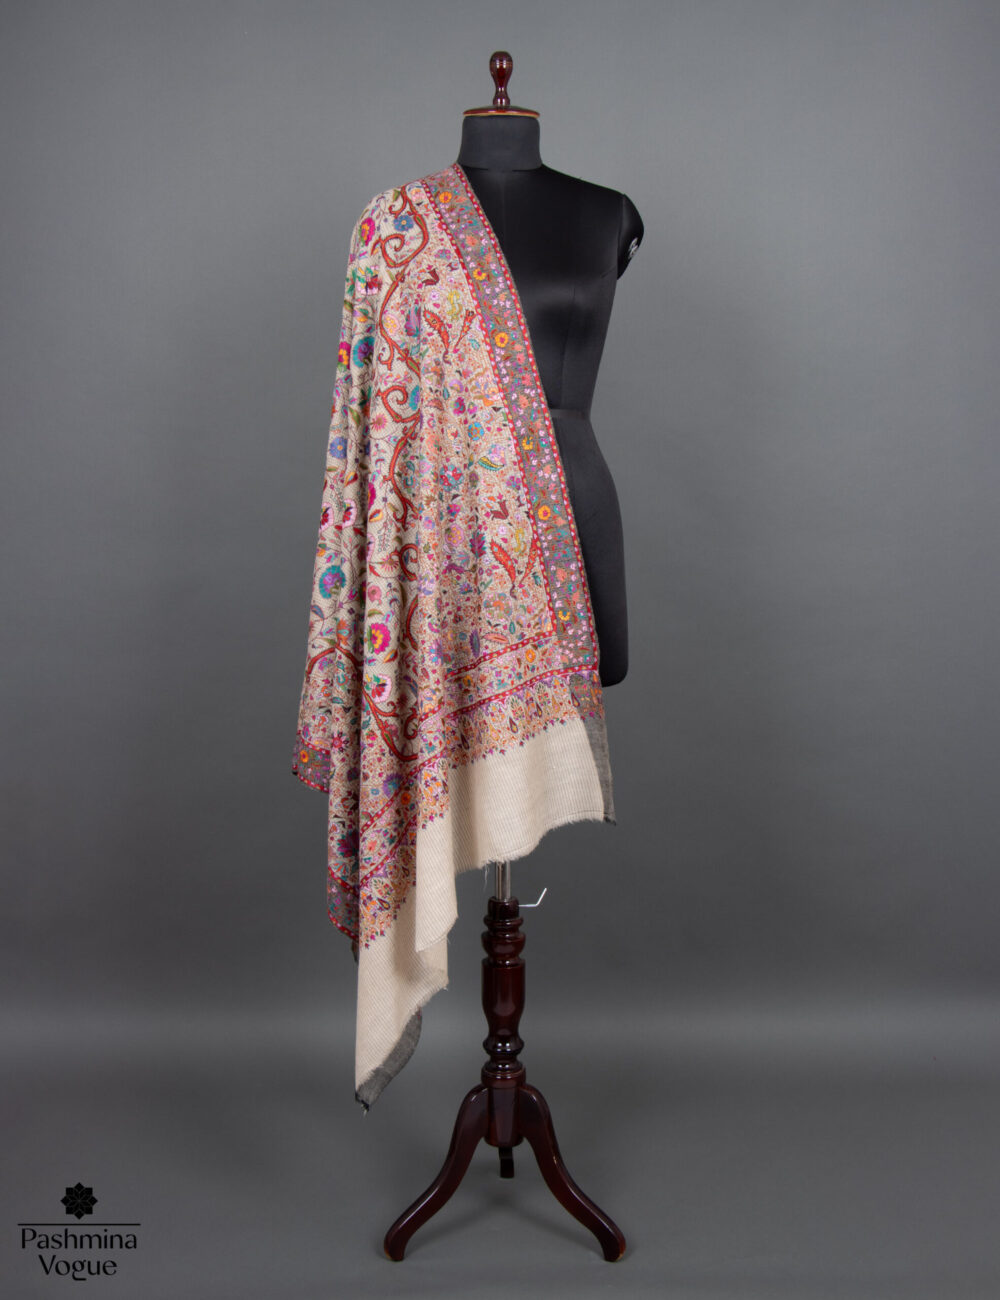 shawls-online-pakistan